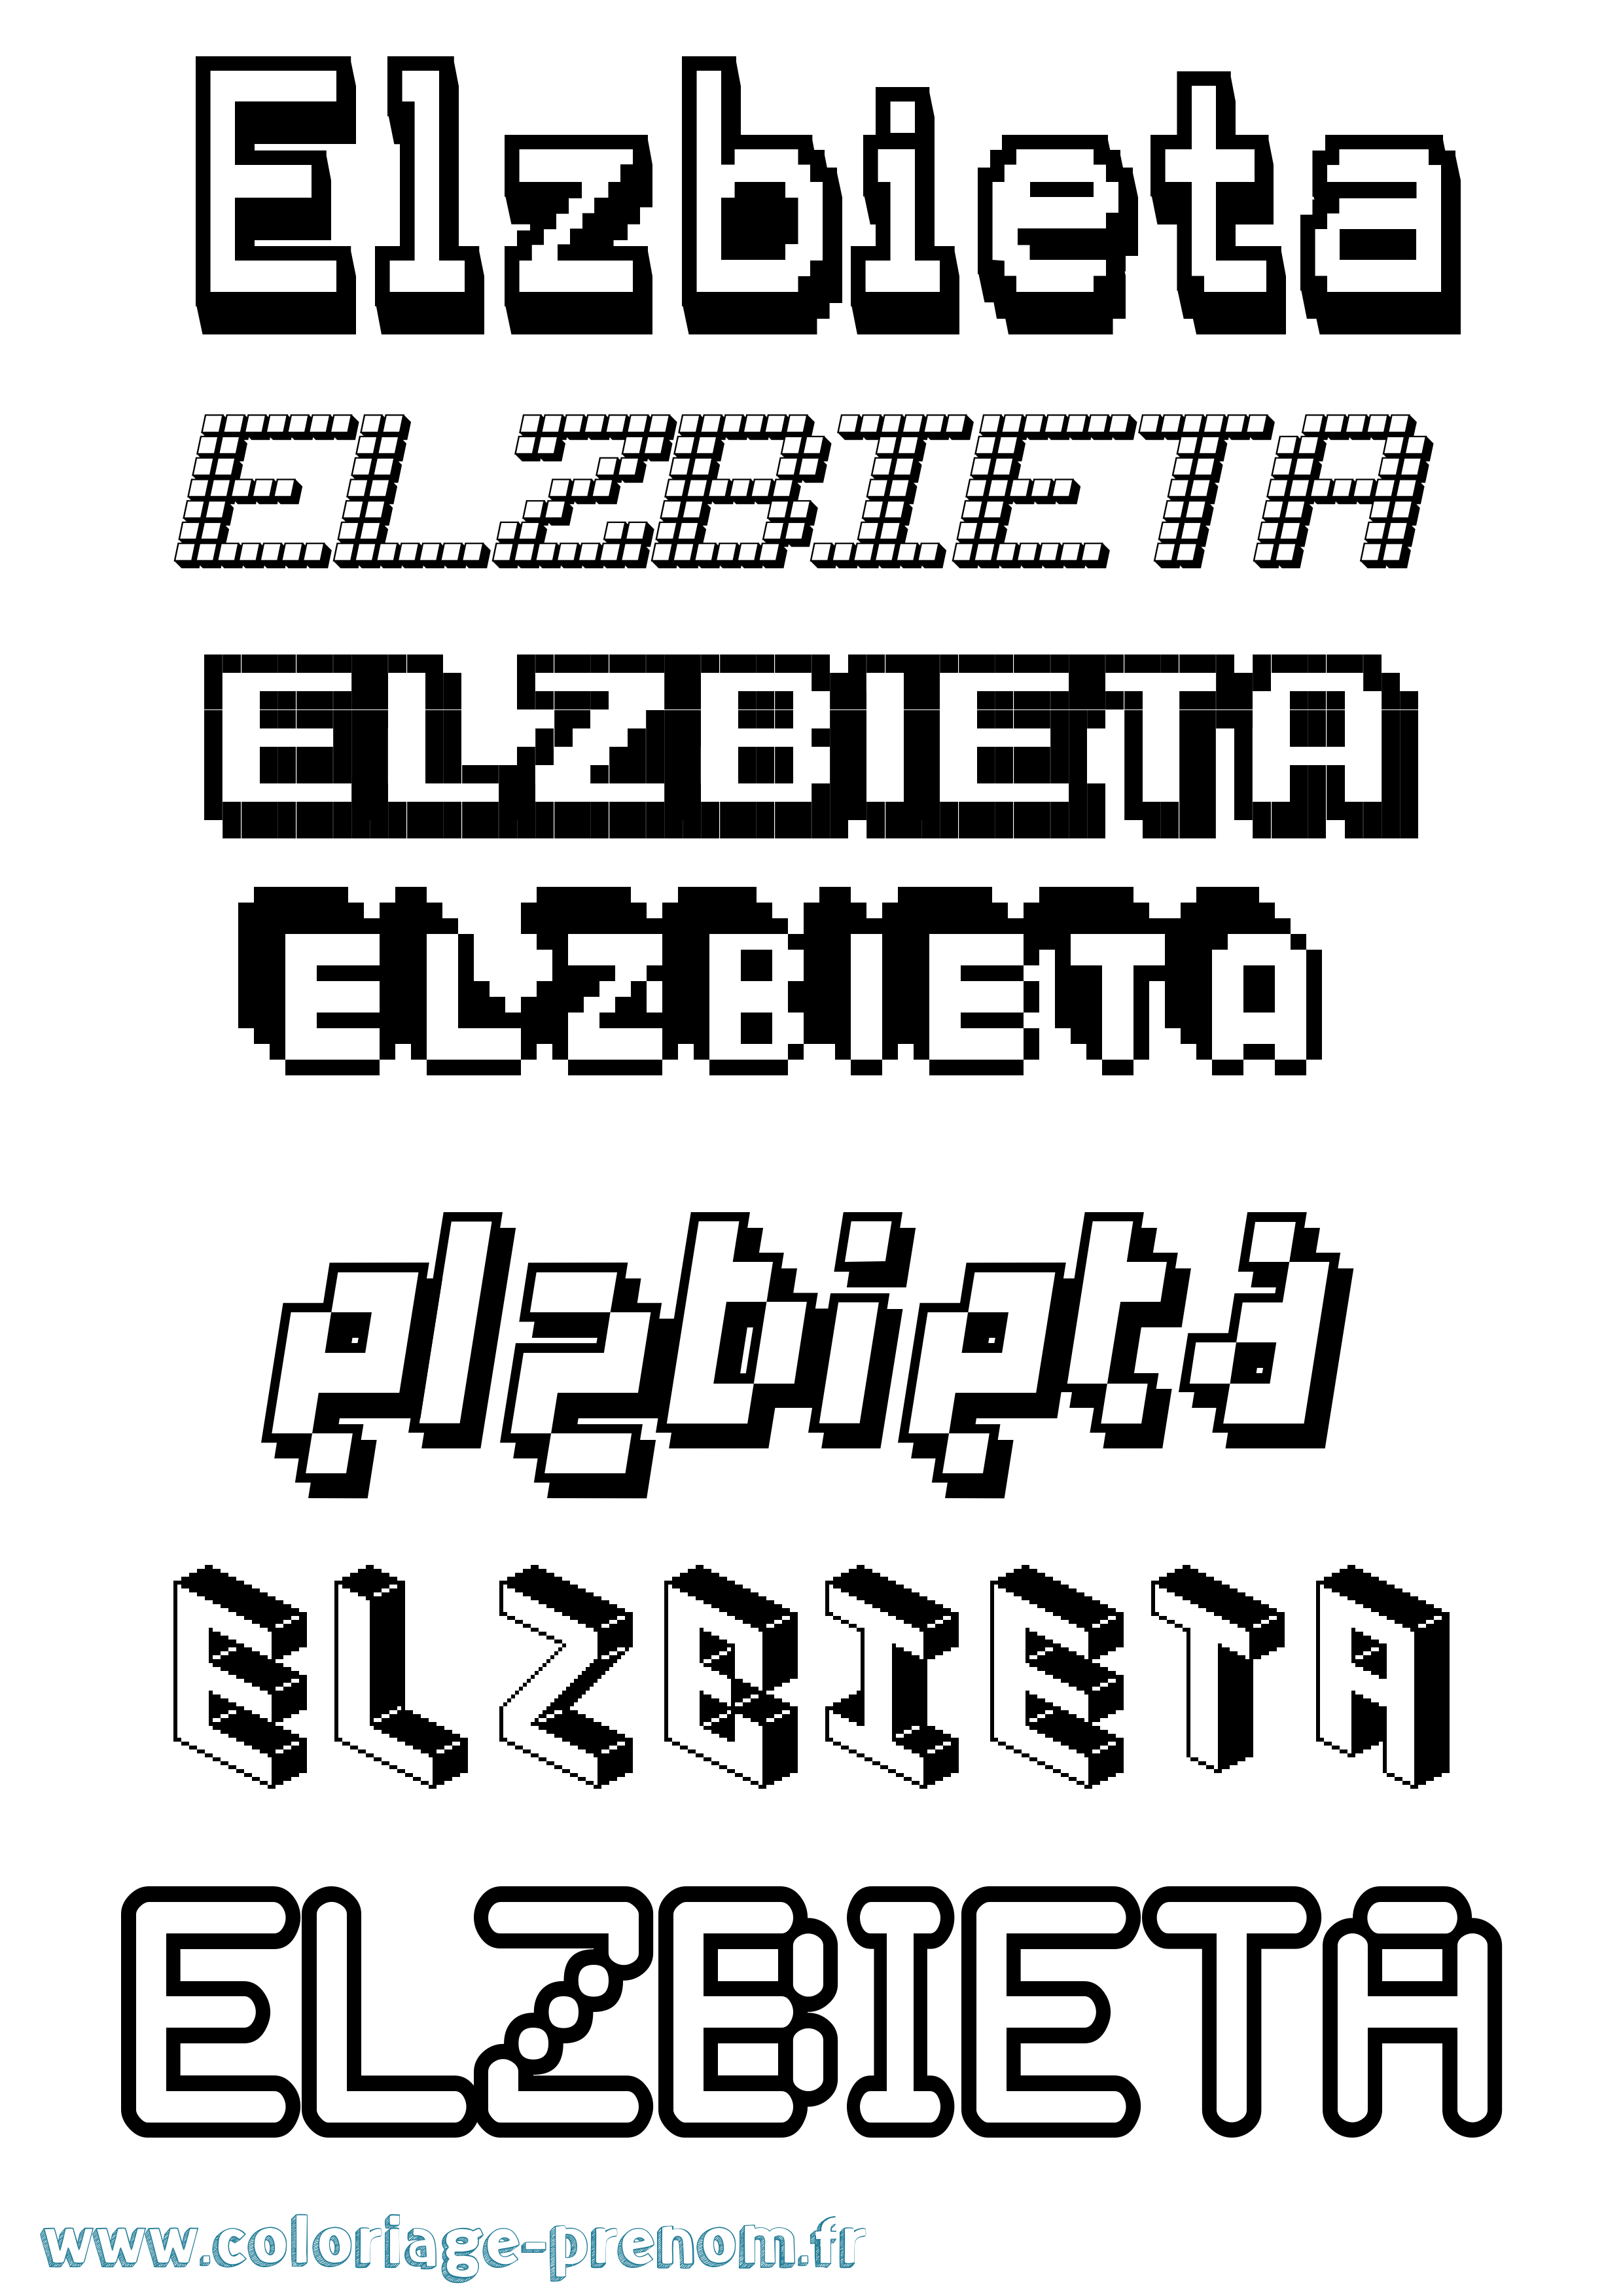 Coloriage prénom Elzbieta Pixel